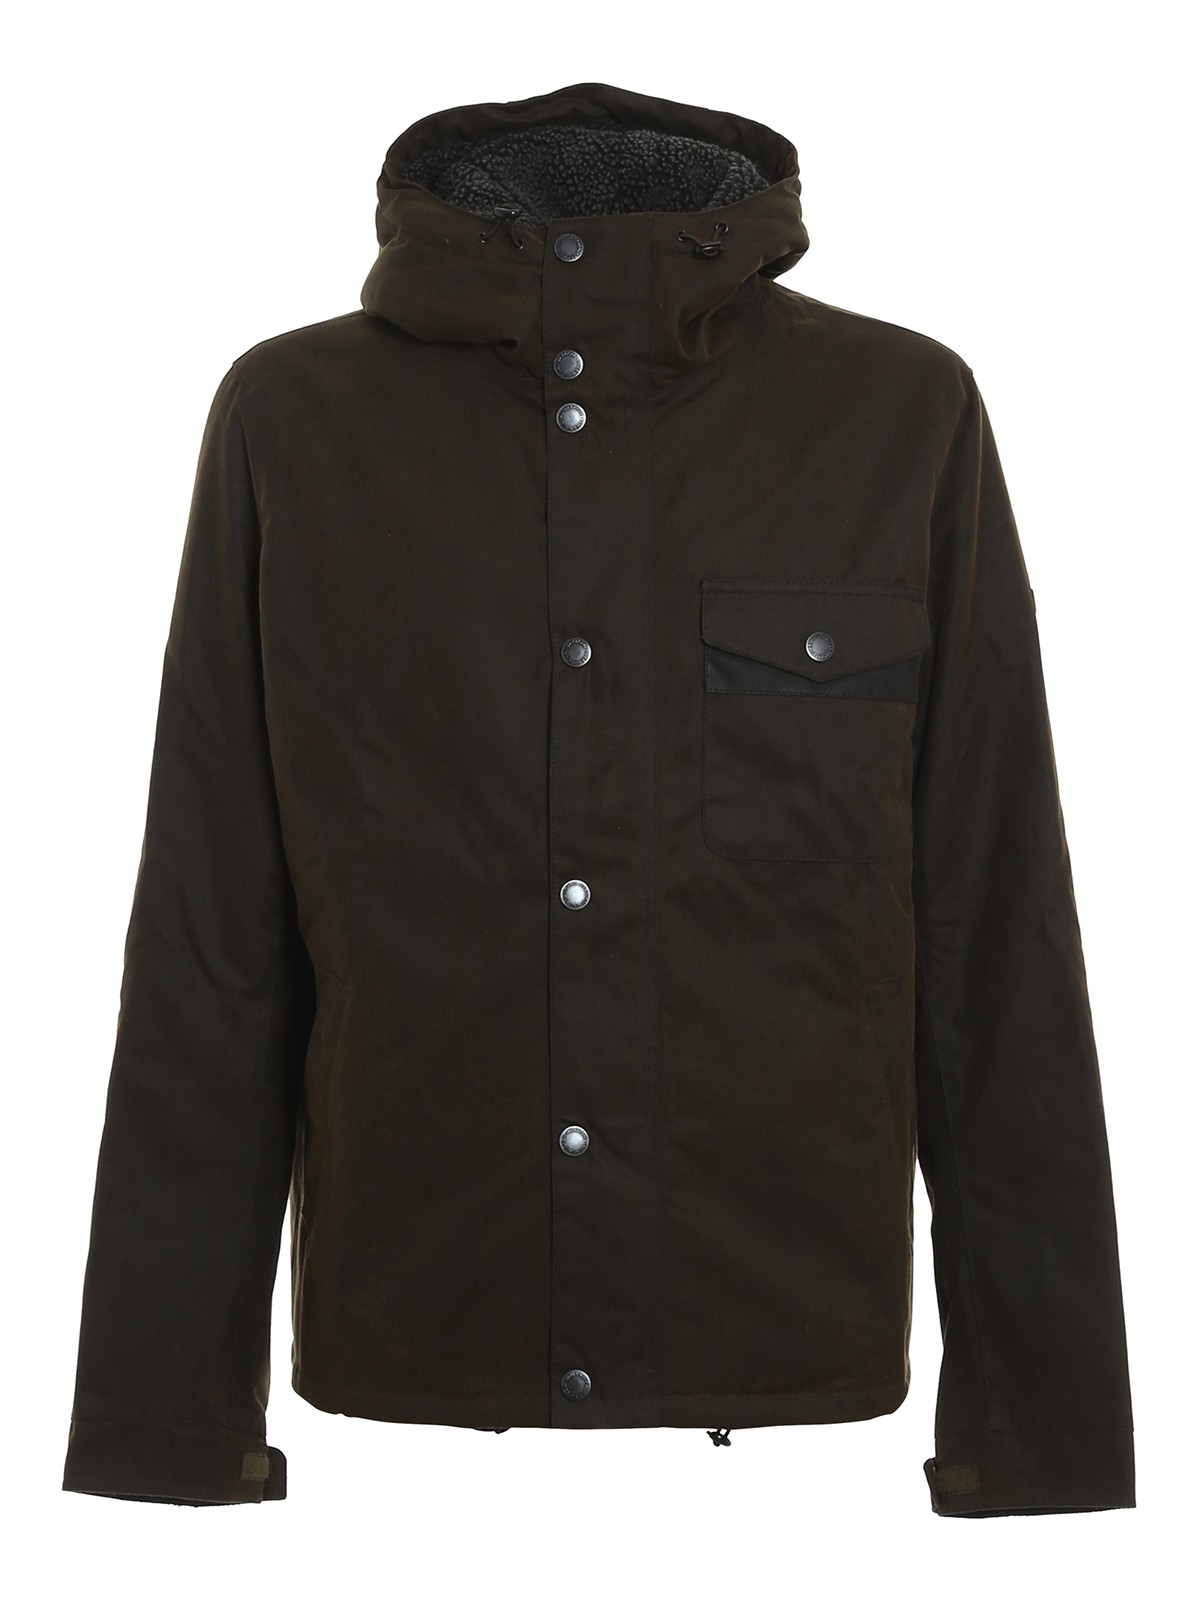 Barbour - Kevlar jacket - casual jackets - MWX1372OL51 | iKRIX.com